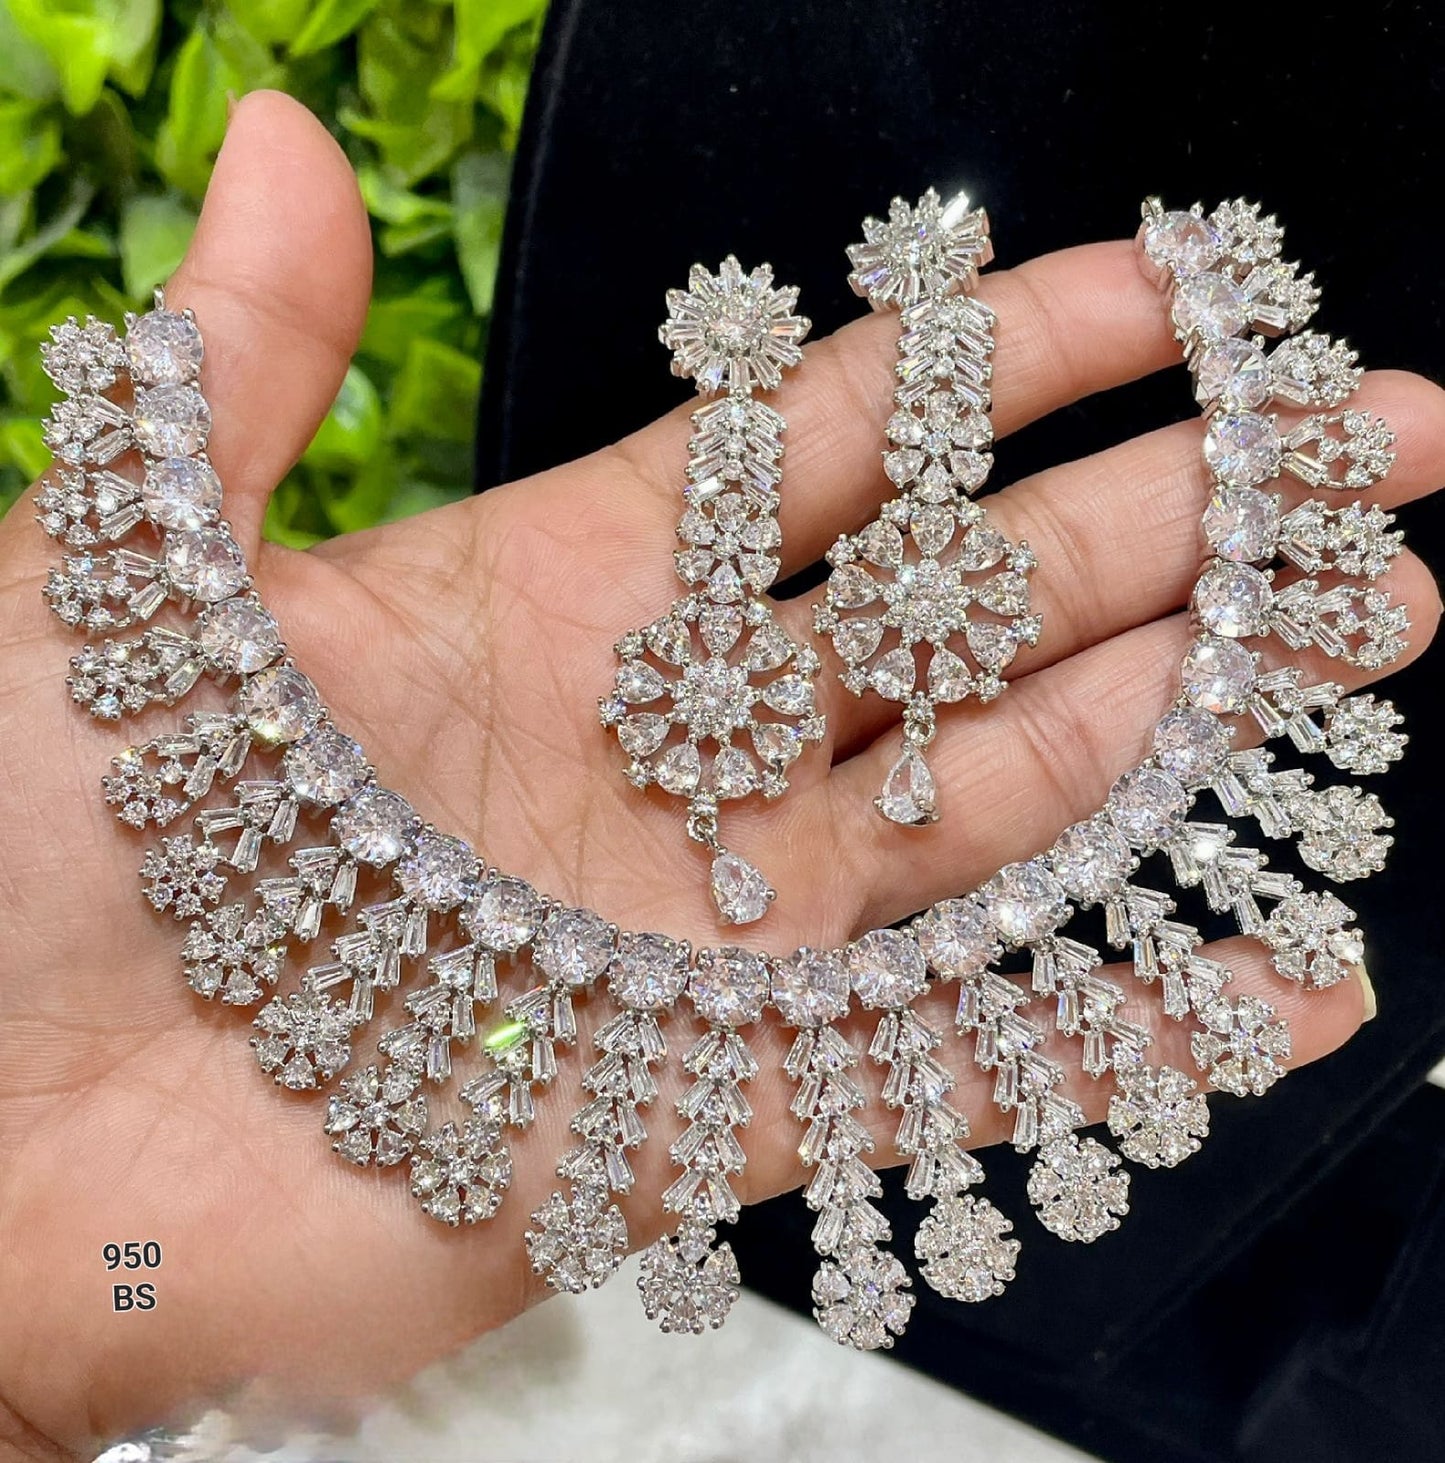 Sparkling American Diamond Jewelry Ensemble: Necklace & Earrings